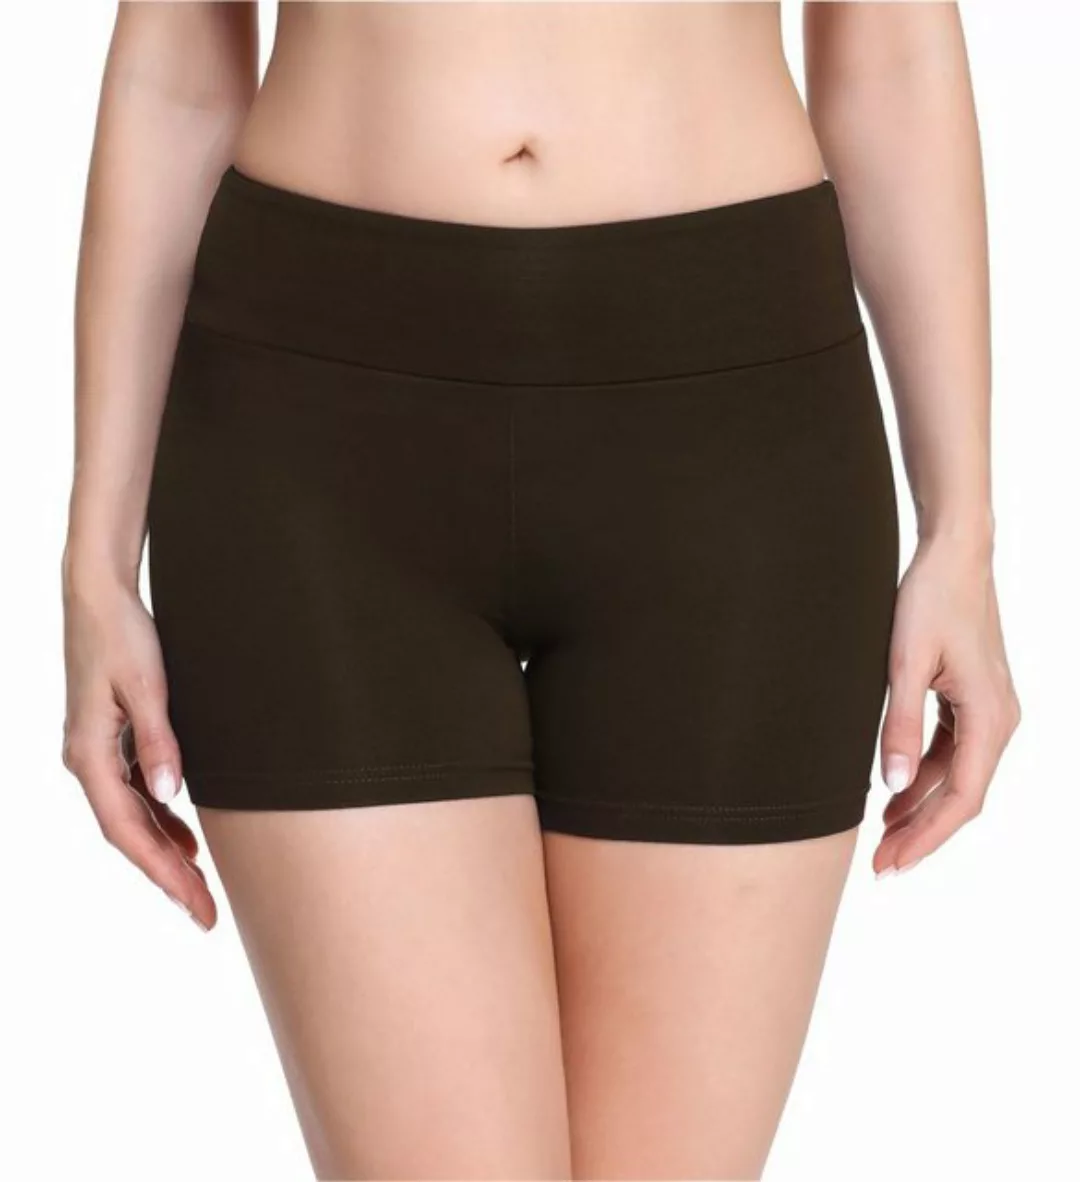 Merry Style Leggings Damen Shorts Radlerhose Unterhose Hotpants Boxershorts günstig online kaufen